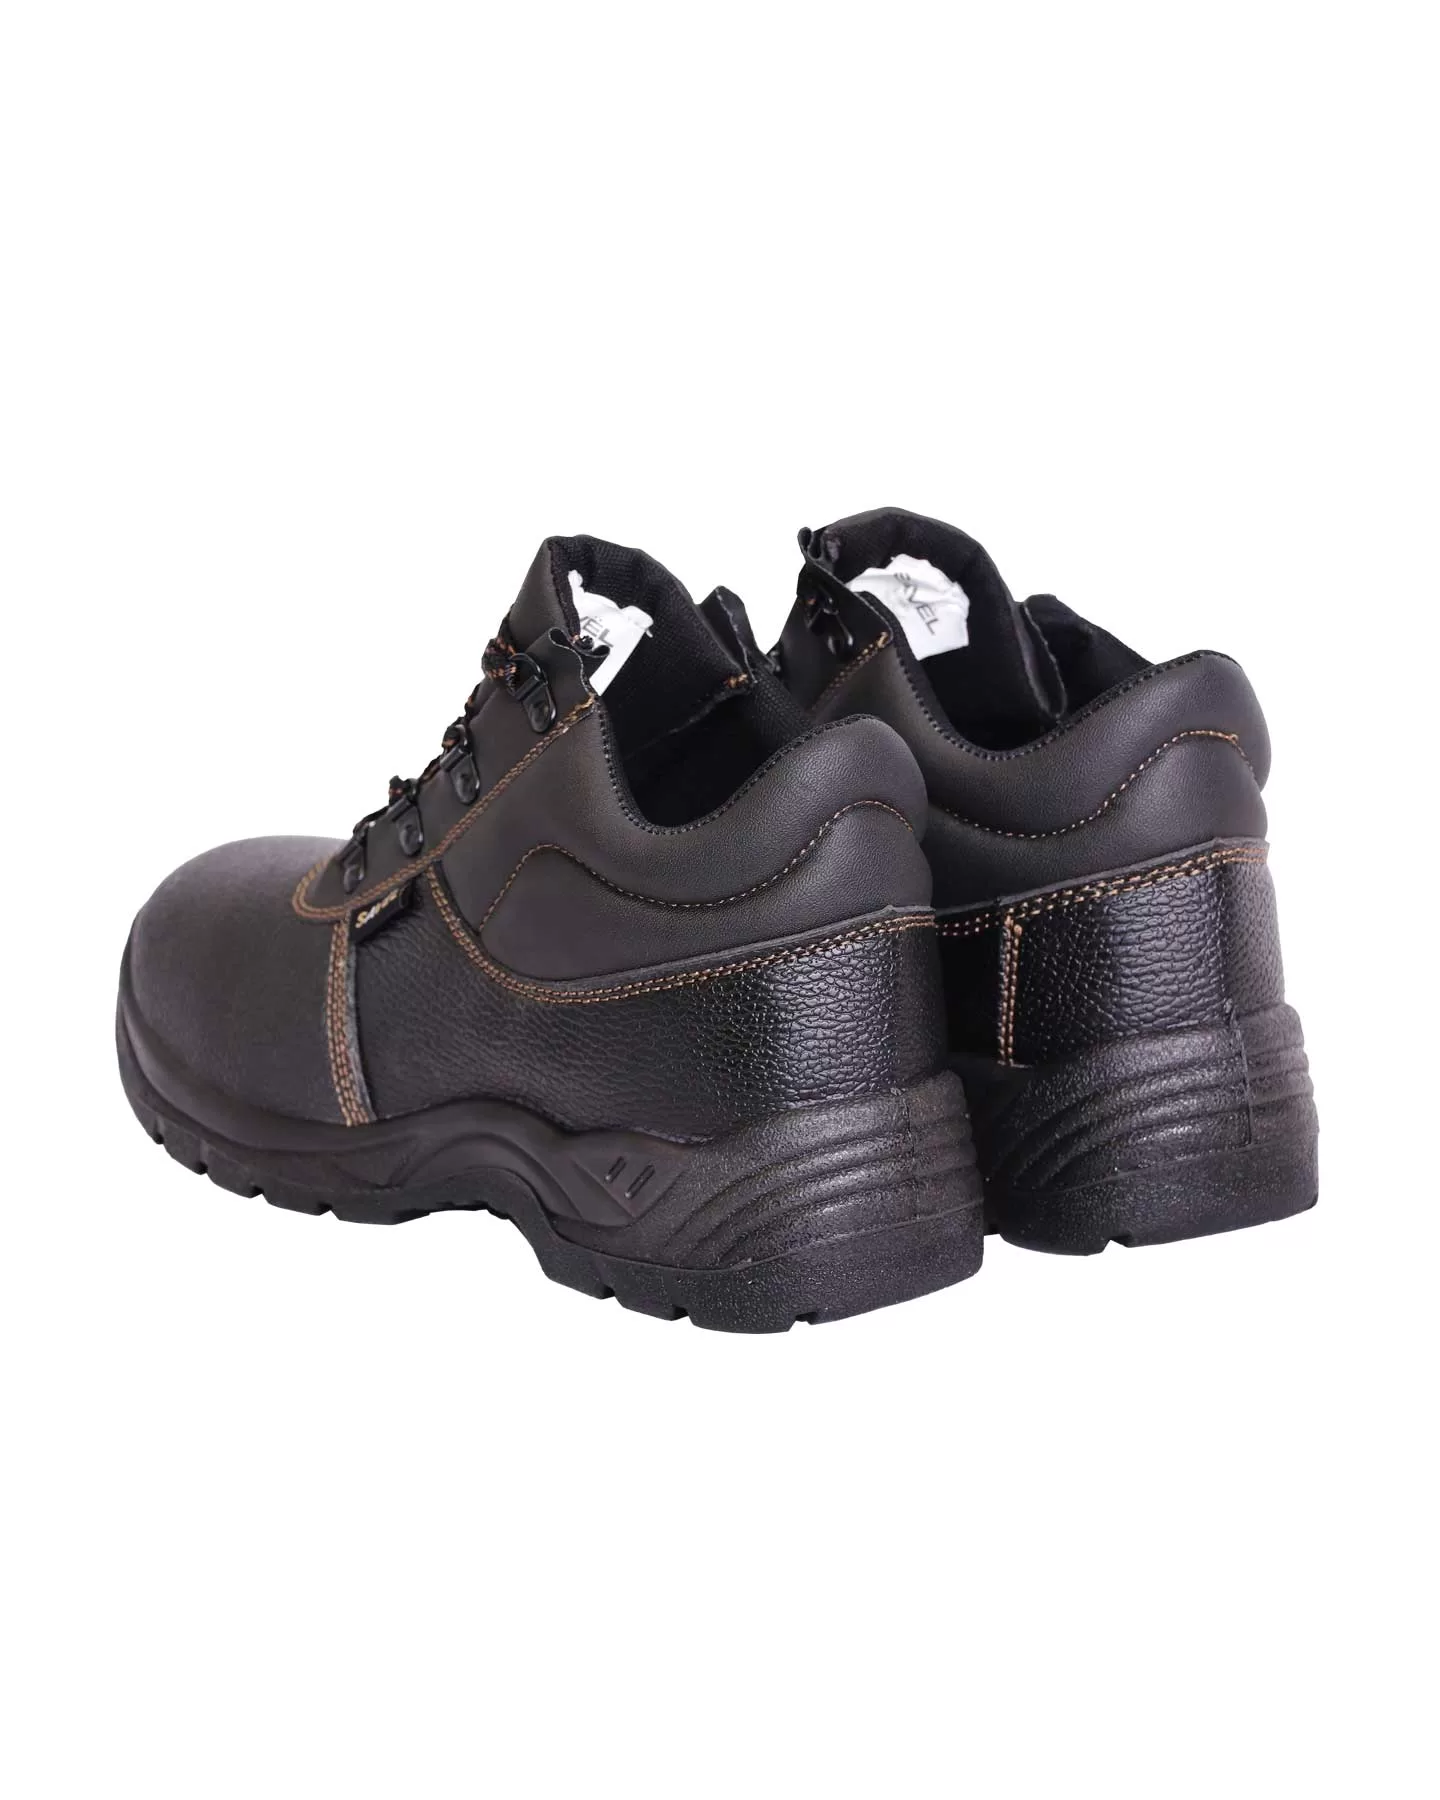 Ботинки Footwear ПУ 48 размер. Ботинки "Footwear", ПУ. Обувь Footwear Сириус. 28507-99 Ботинки.